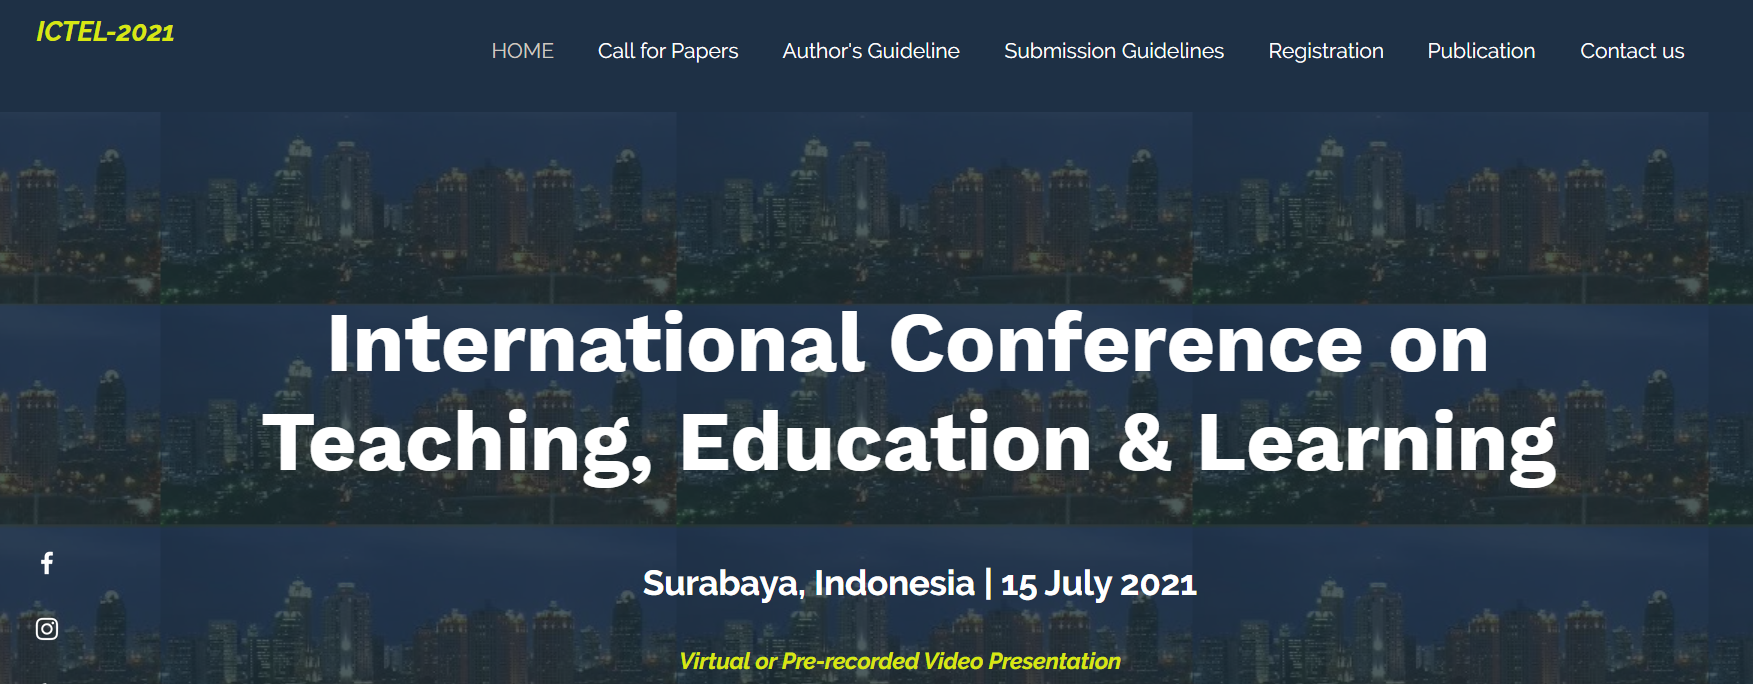 International Conference on Teaching, Education & Learning, Surabaya, Indonesia, Indonesia